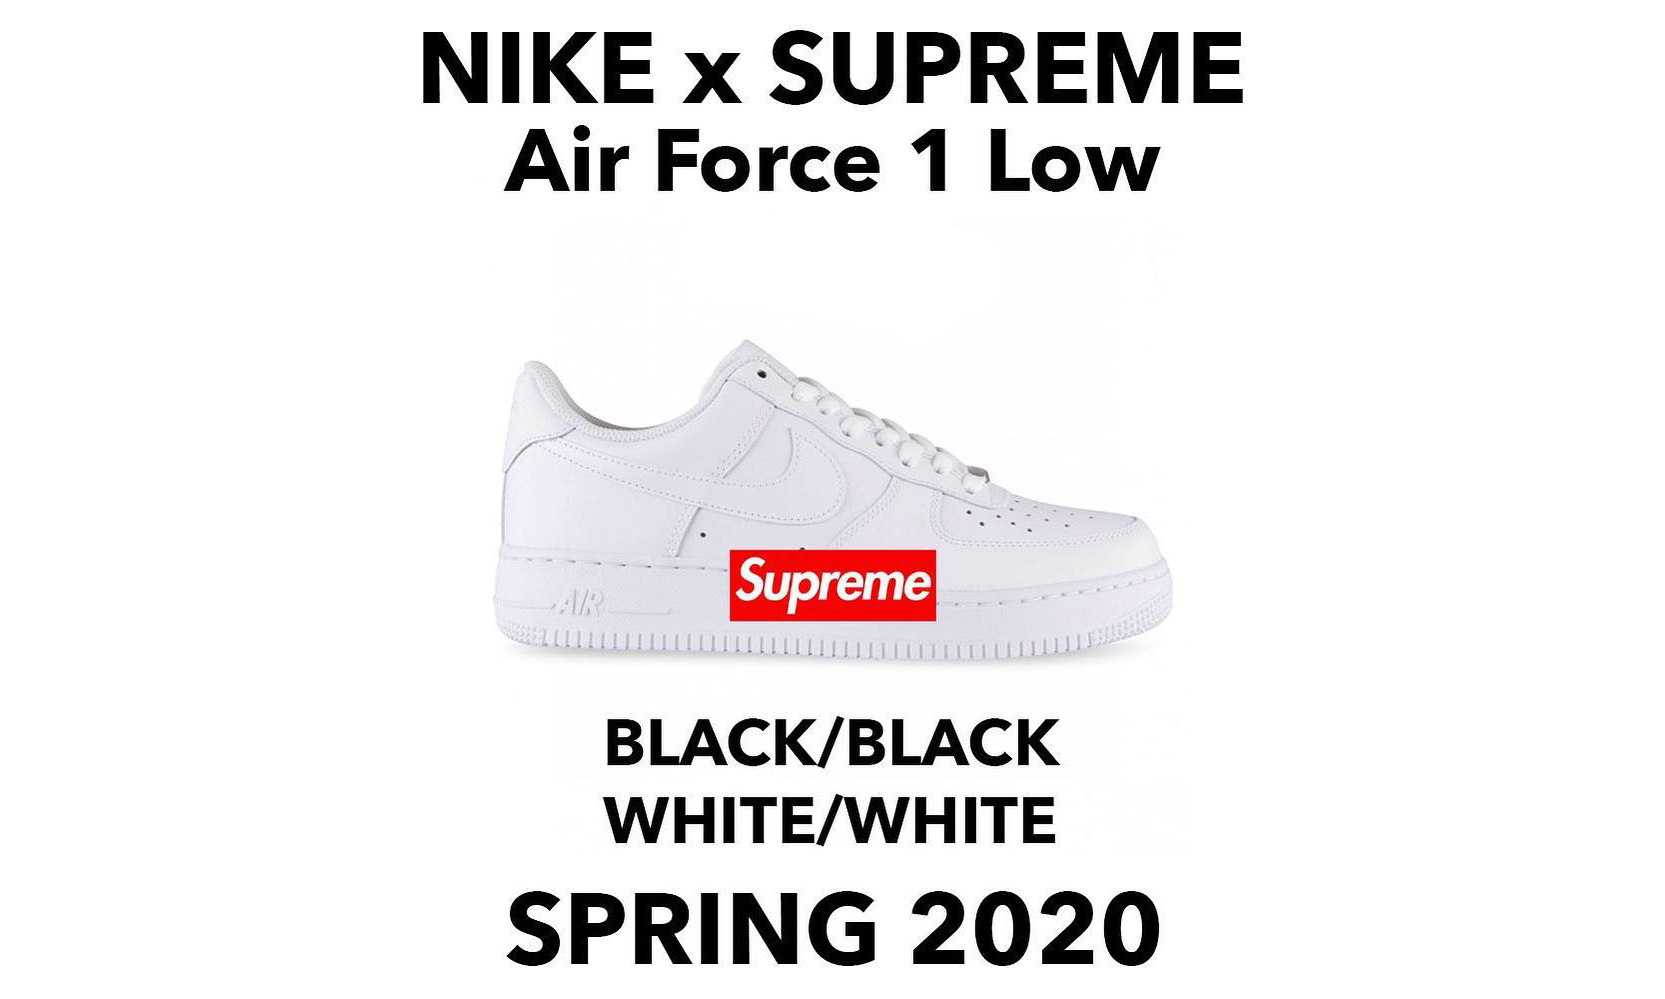 Supreme x Nike Air Force 1 联名系列将于 2020 春季再现